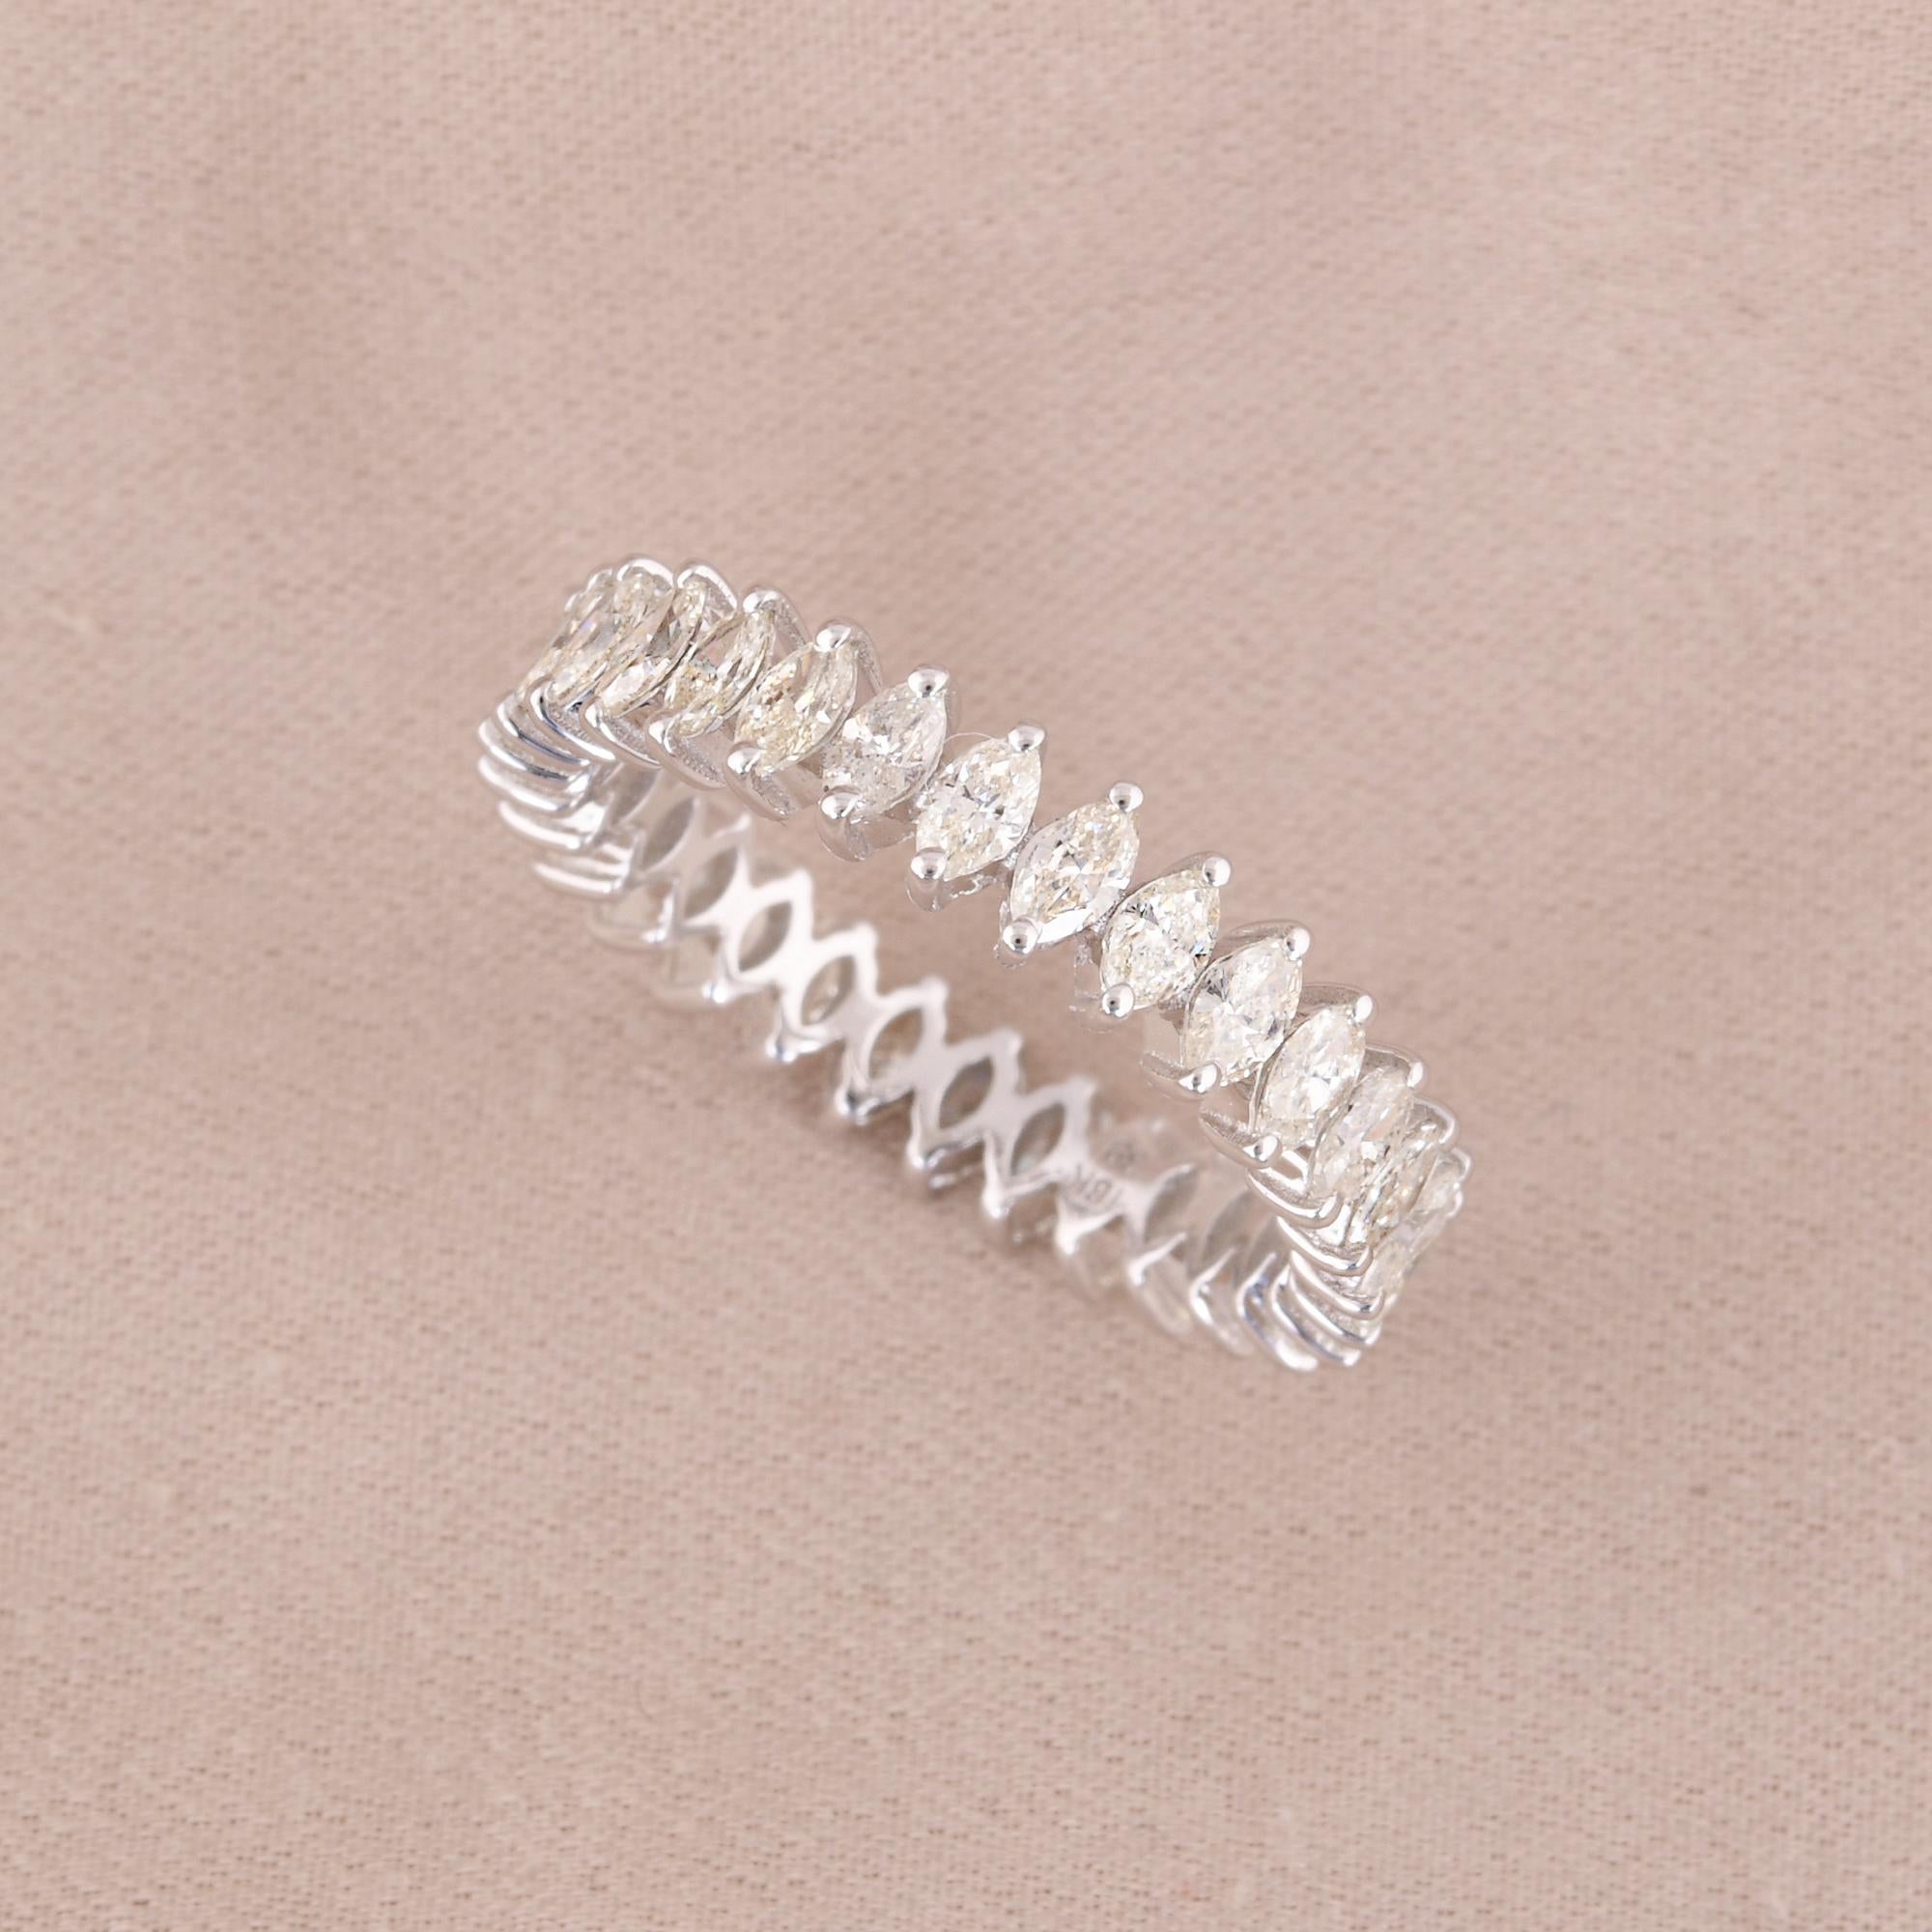 Pear Cut 1.65 Carat Pear Shape Diamond Band Ring 14 Karat White Gold Handmade Jewelry For Sale